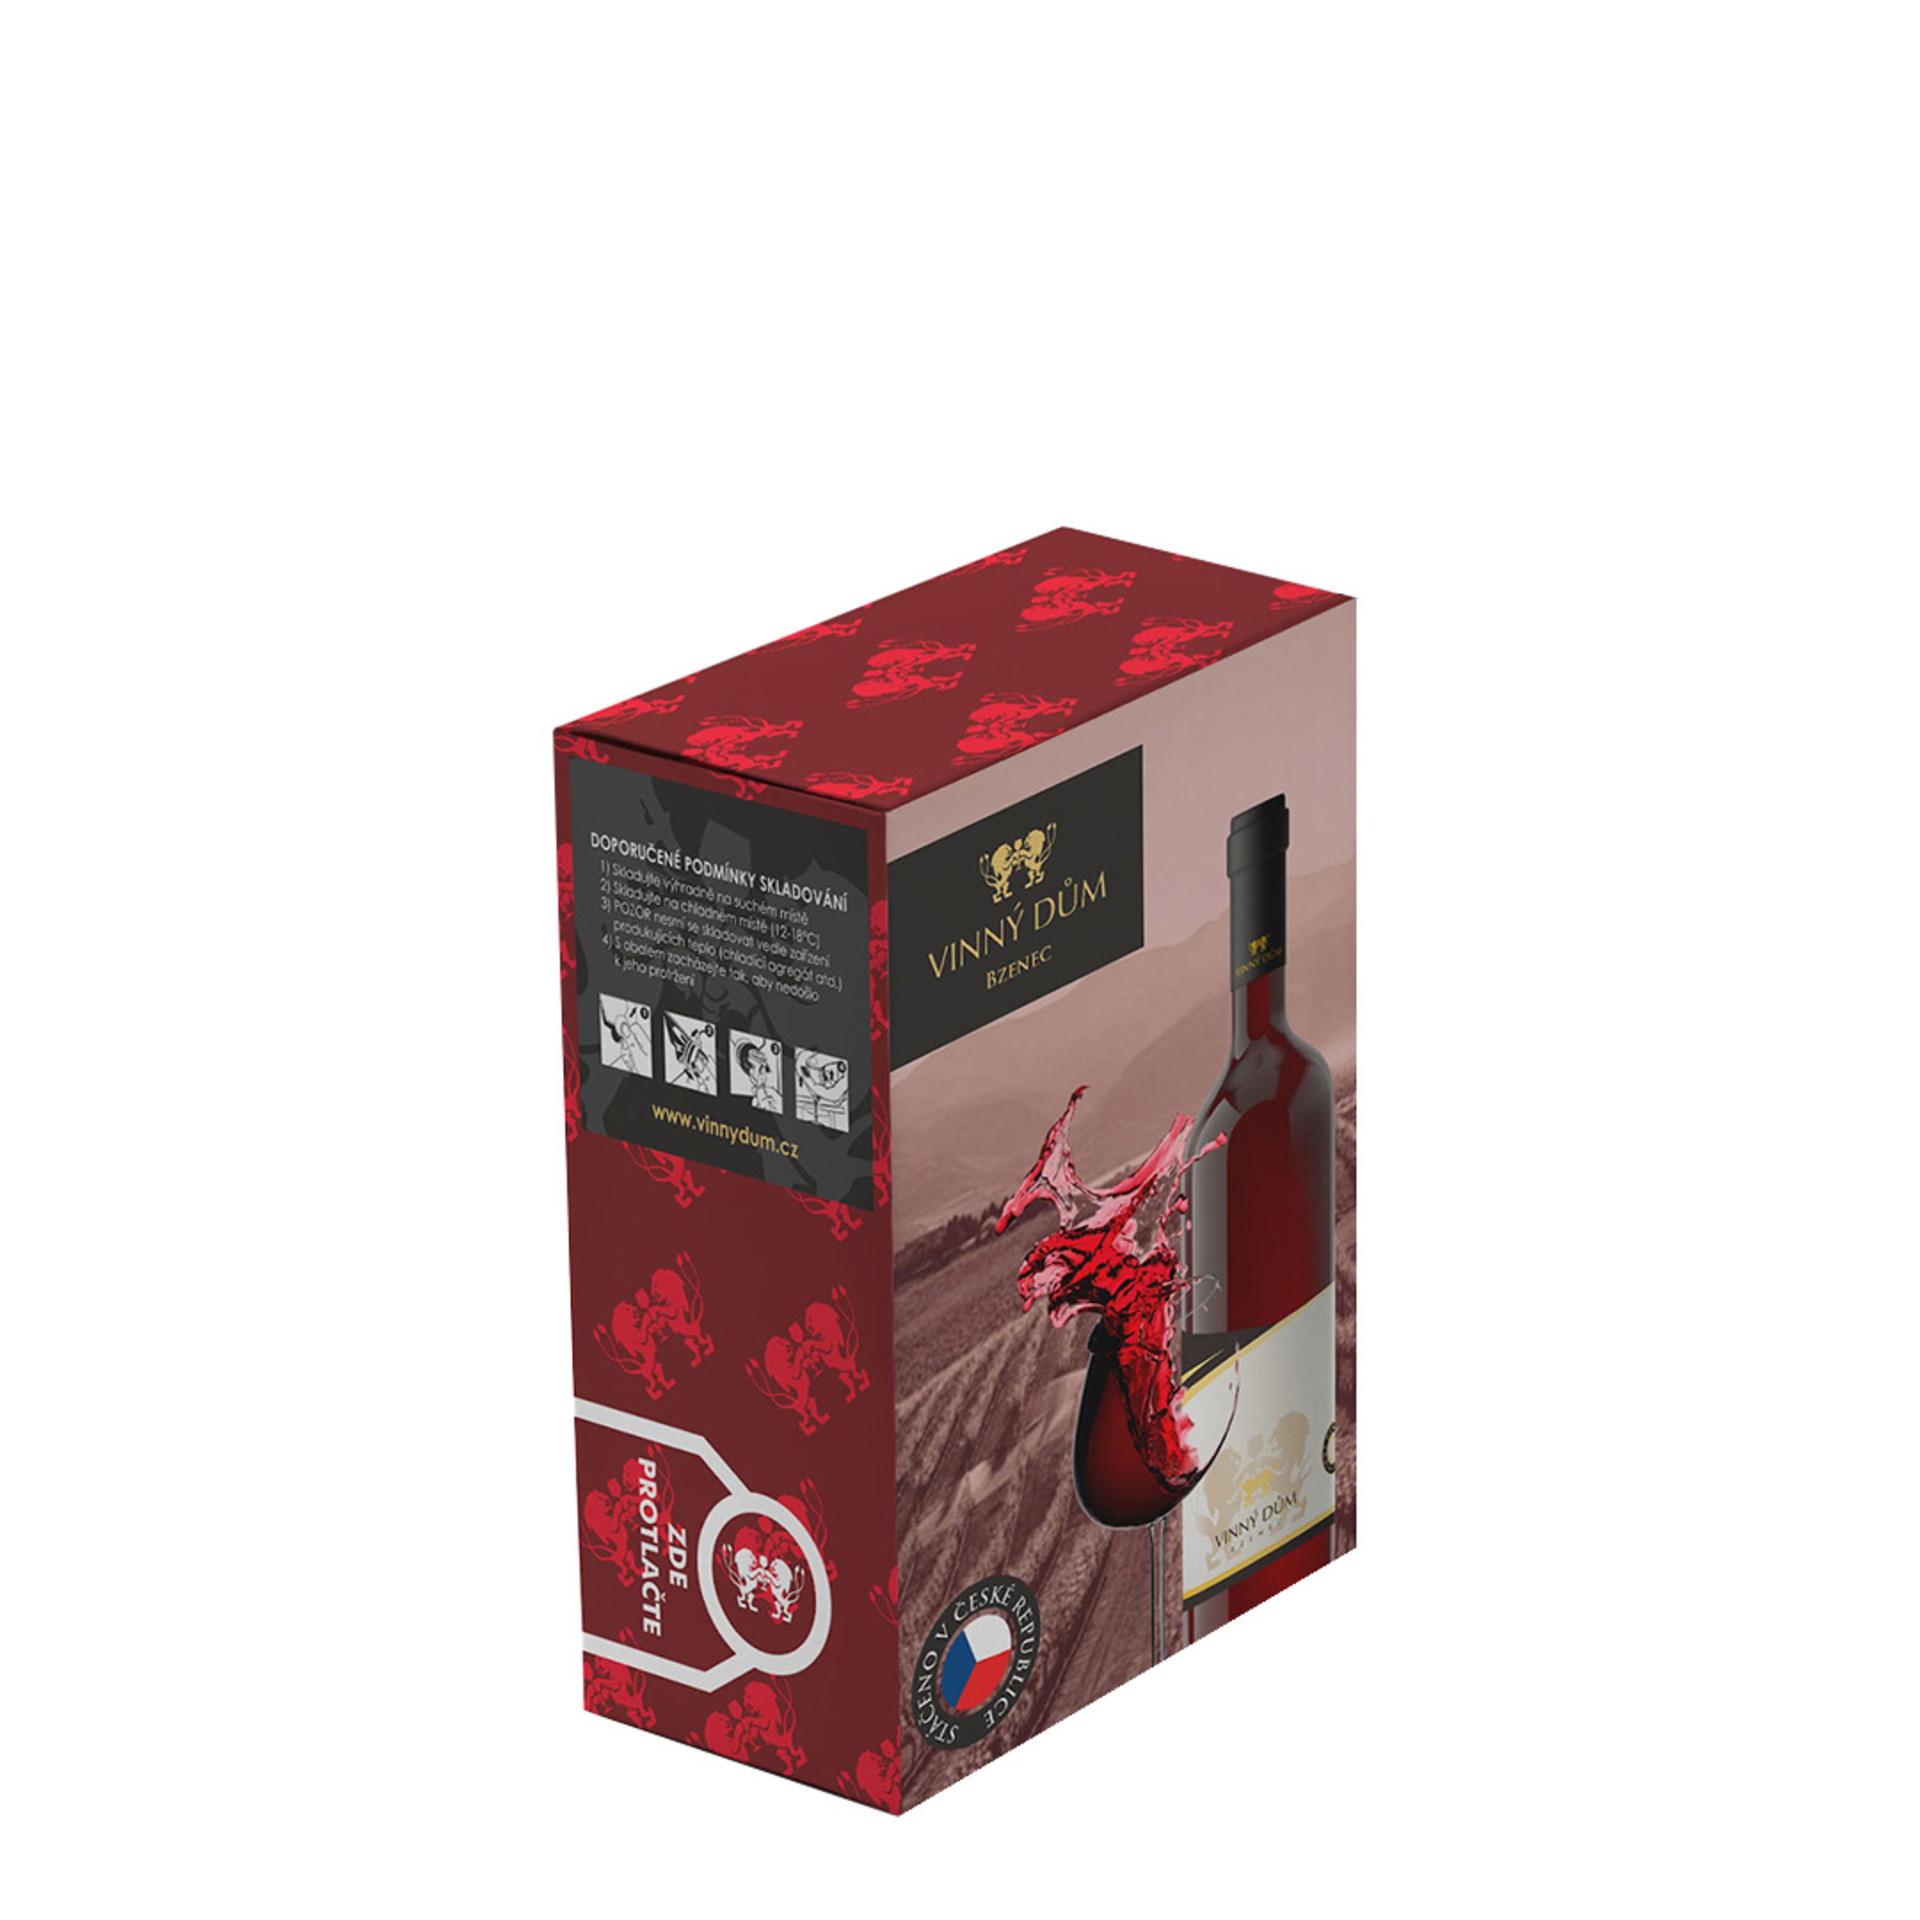 Vinný dům André rosé růžové víno polosuché BAG IN BOX 5 l